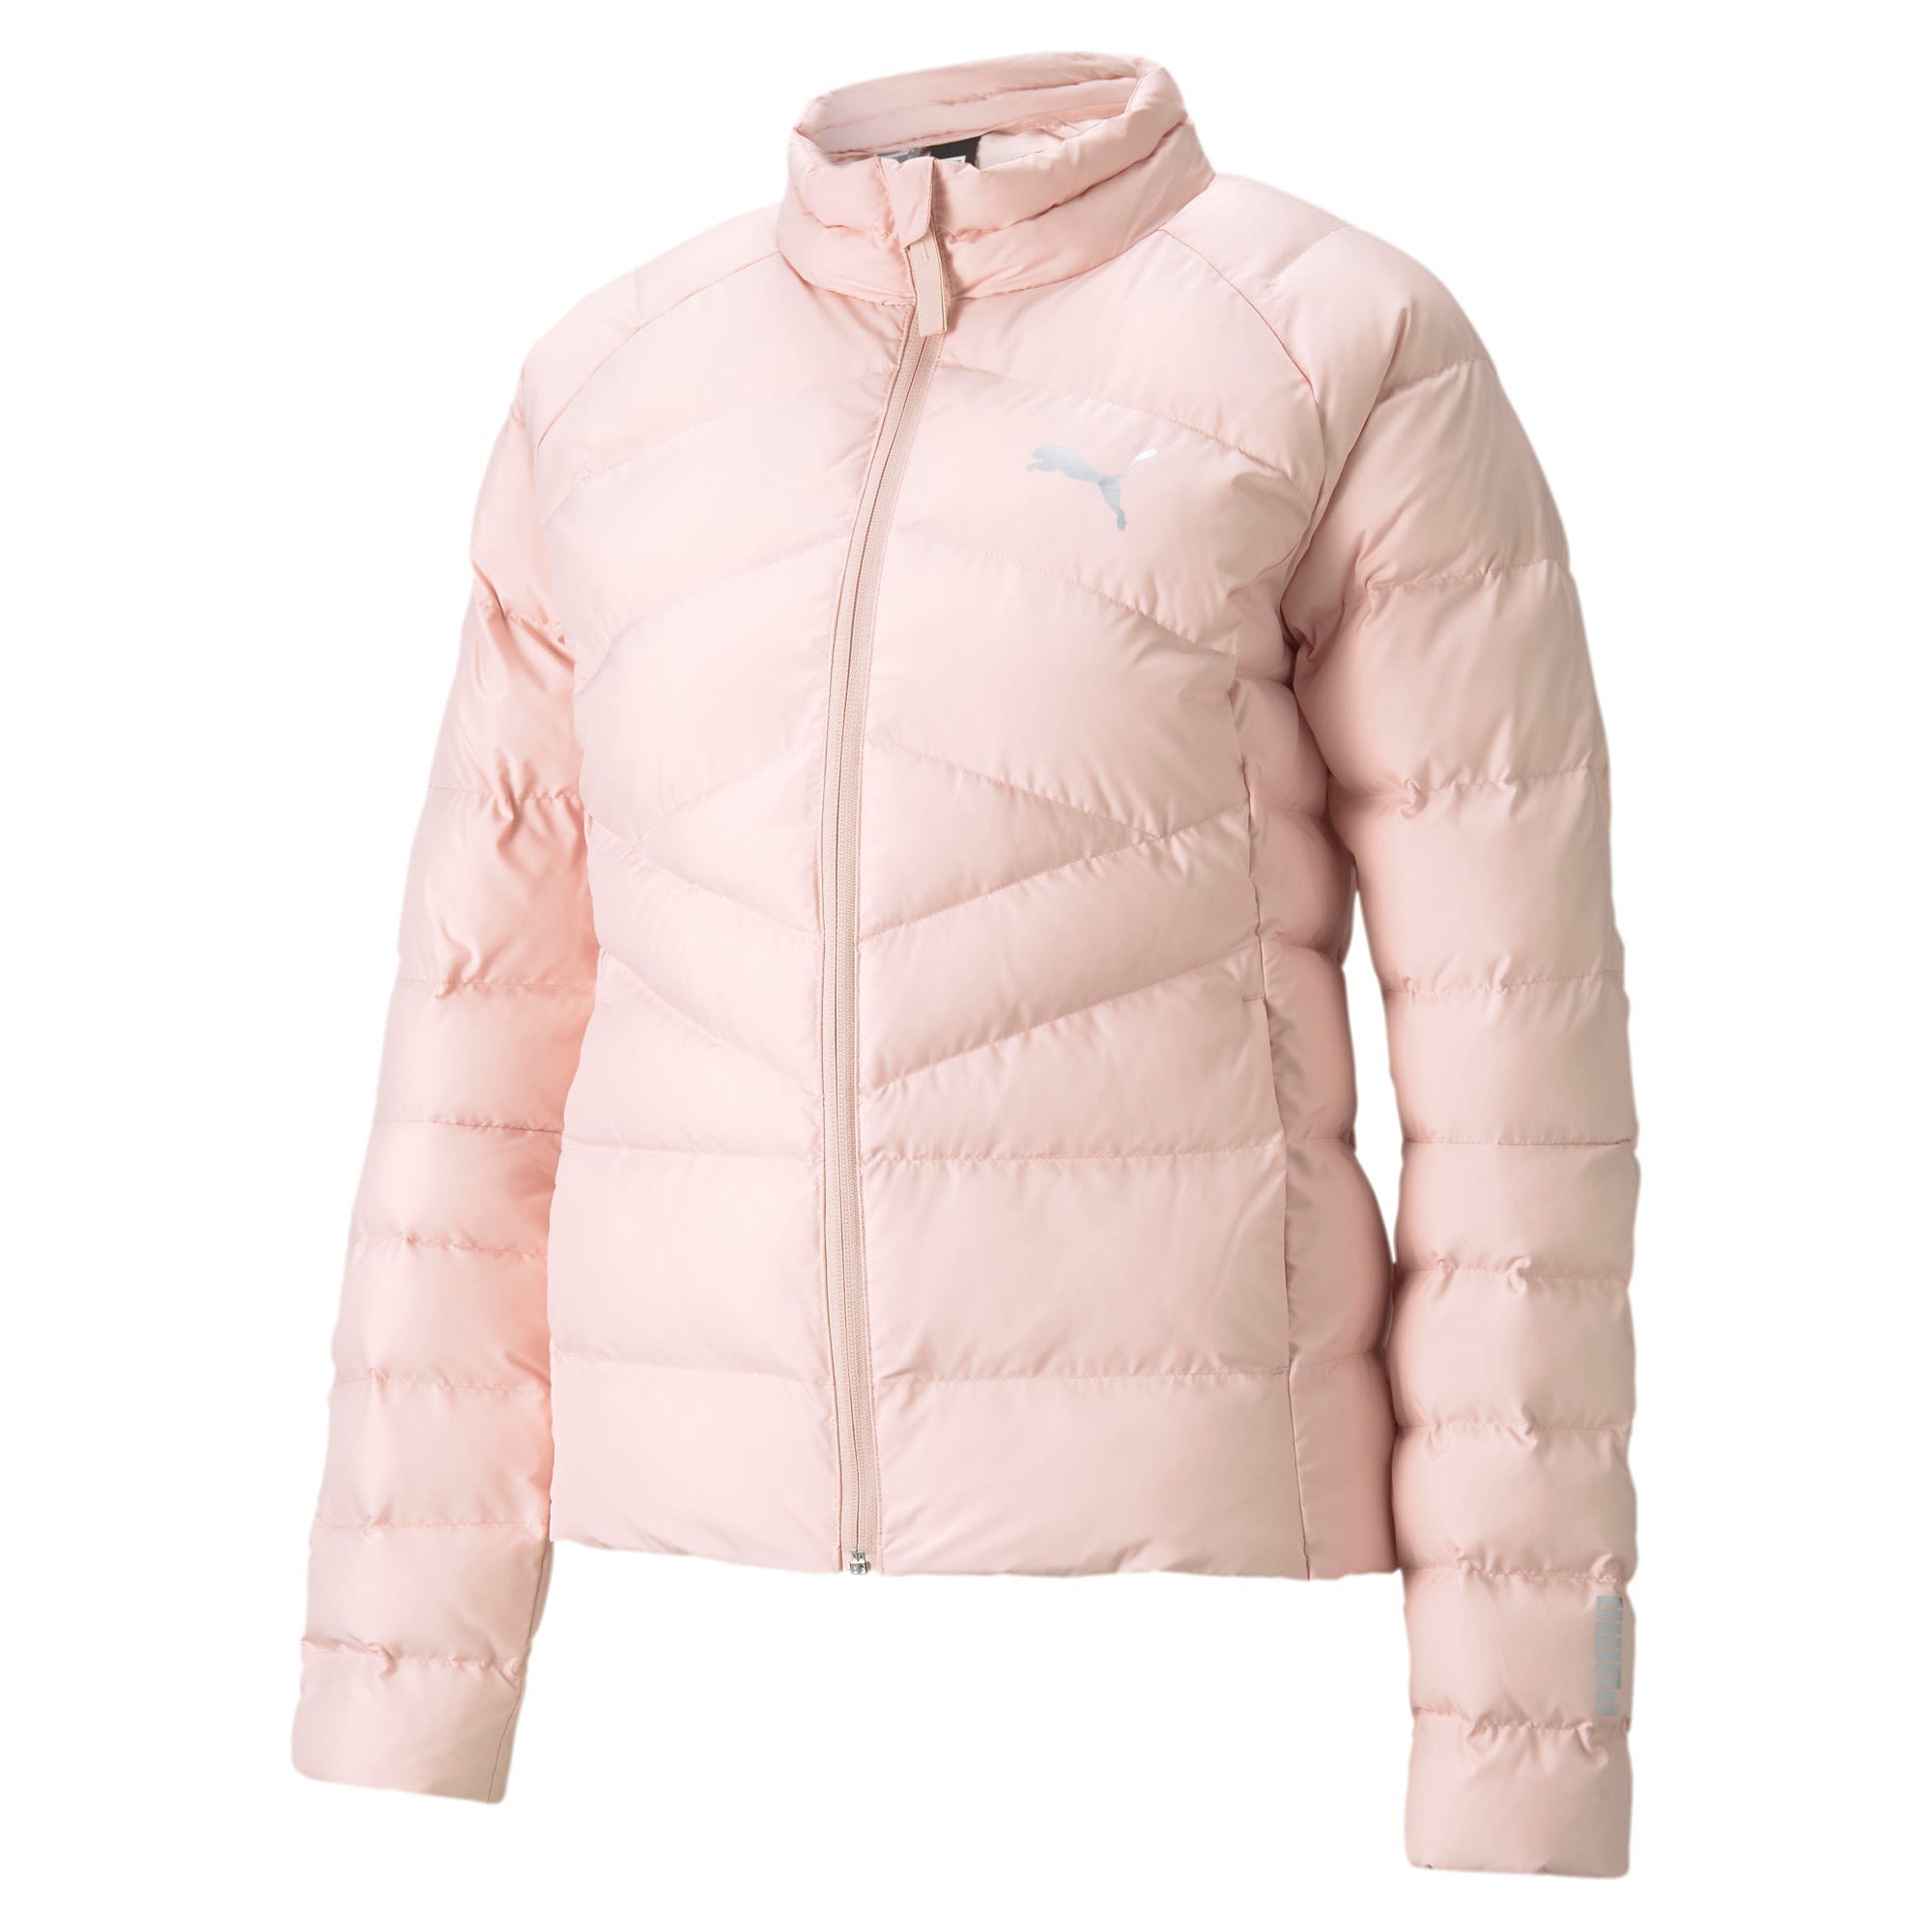 Puma Warmcell Lightweight Jacket Pink- Female Anoraks- Grsse S - Farbe Lotus